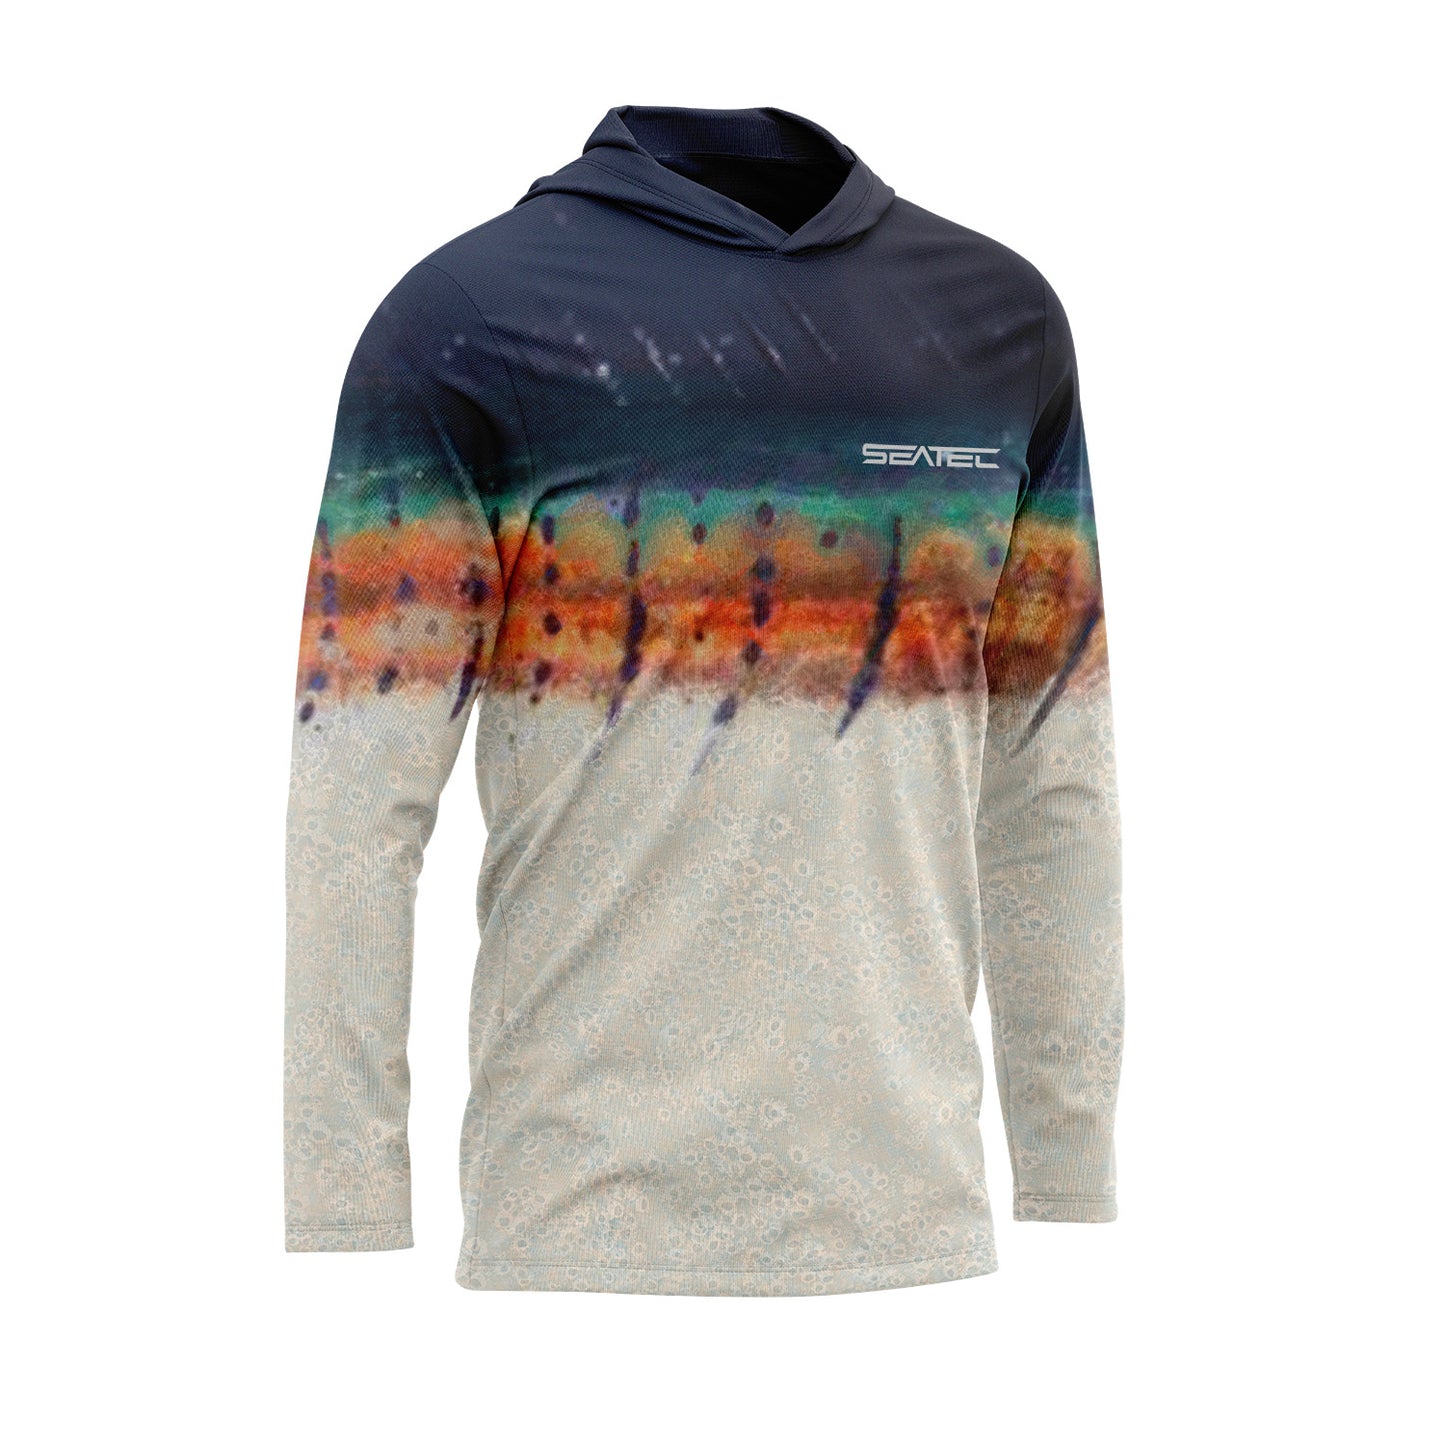 Seatec Outfitters Sailfish Hooded Sport Tec Performance Shirt, Long Sleeve